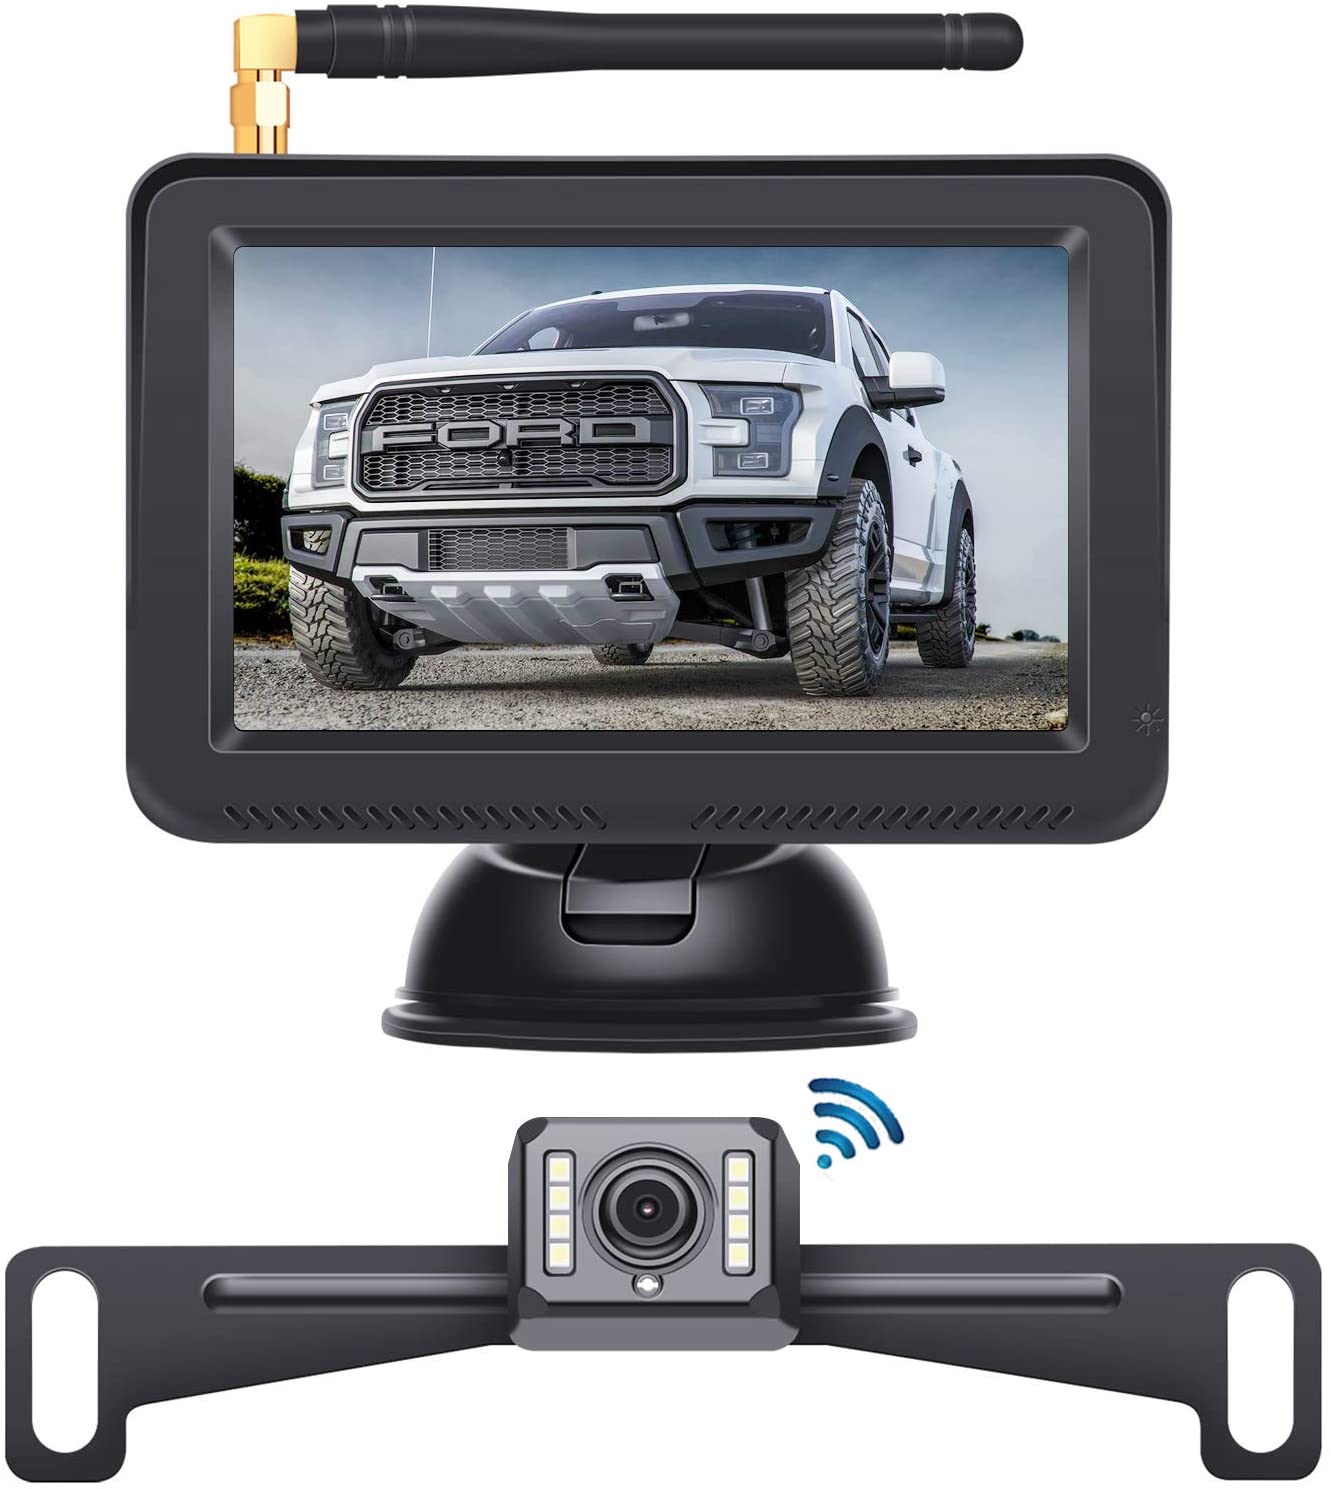 B-Qtech Digital Wireless Backup Camera, 5'' LCD Monitor and IP68 Waterproof Wireless Rear View Camera for Truck, Cars,Trailer (Digital Signal Camera)